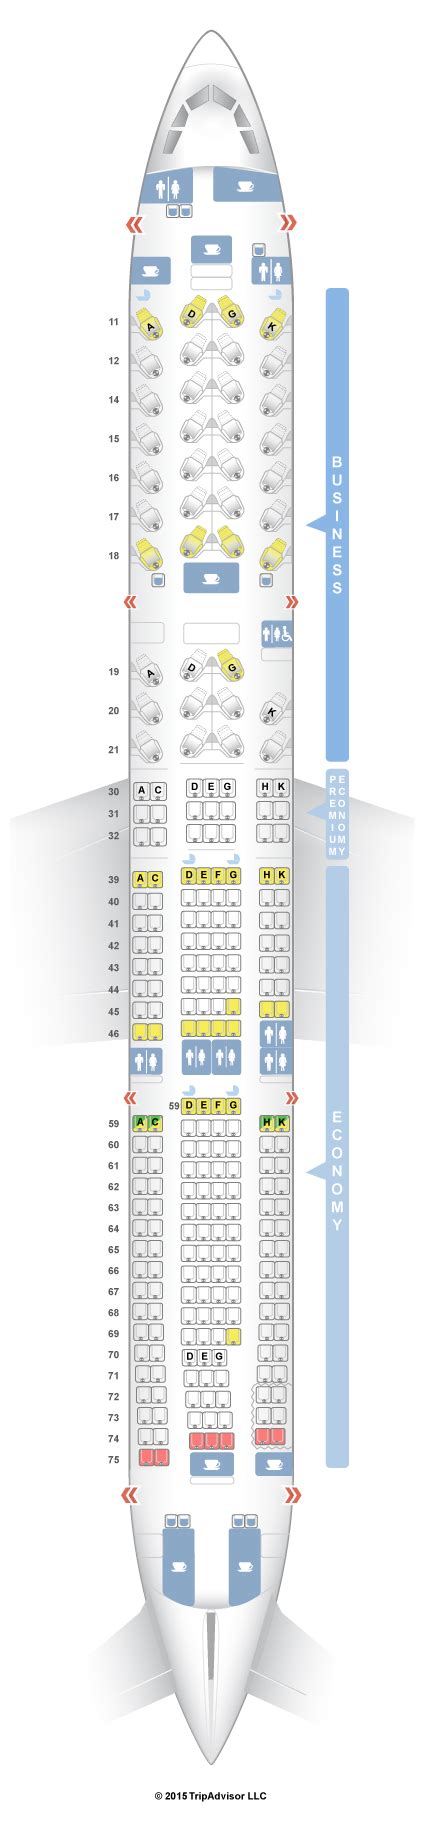 Seatguru Seat Map Cathay Pacific Airbus A330 300 33k Three Class